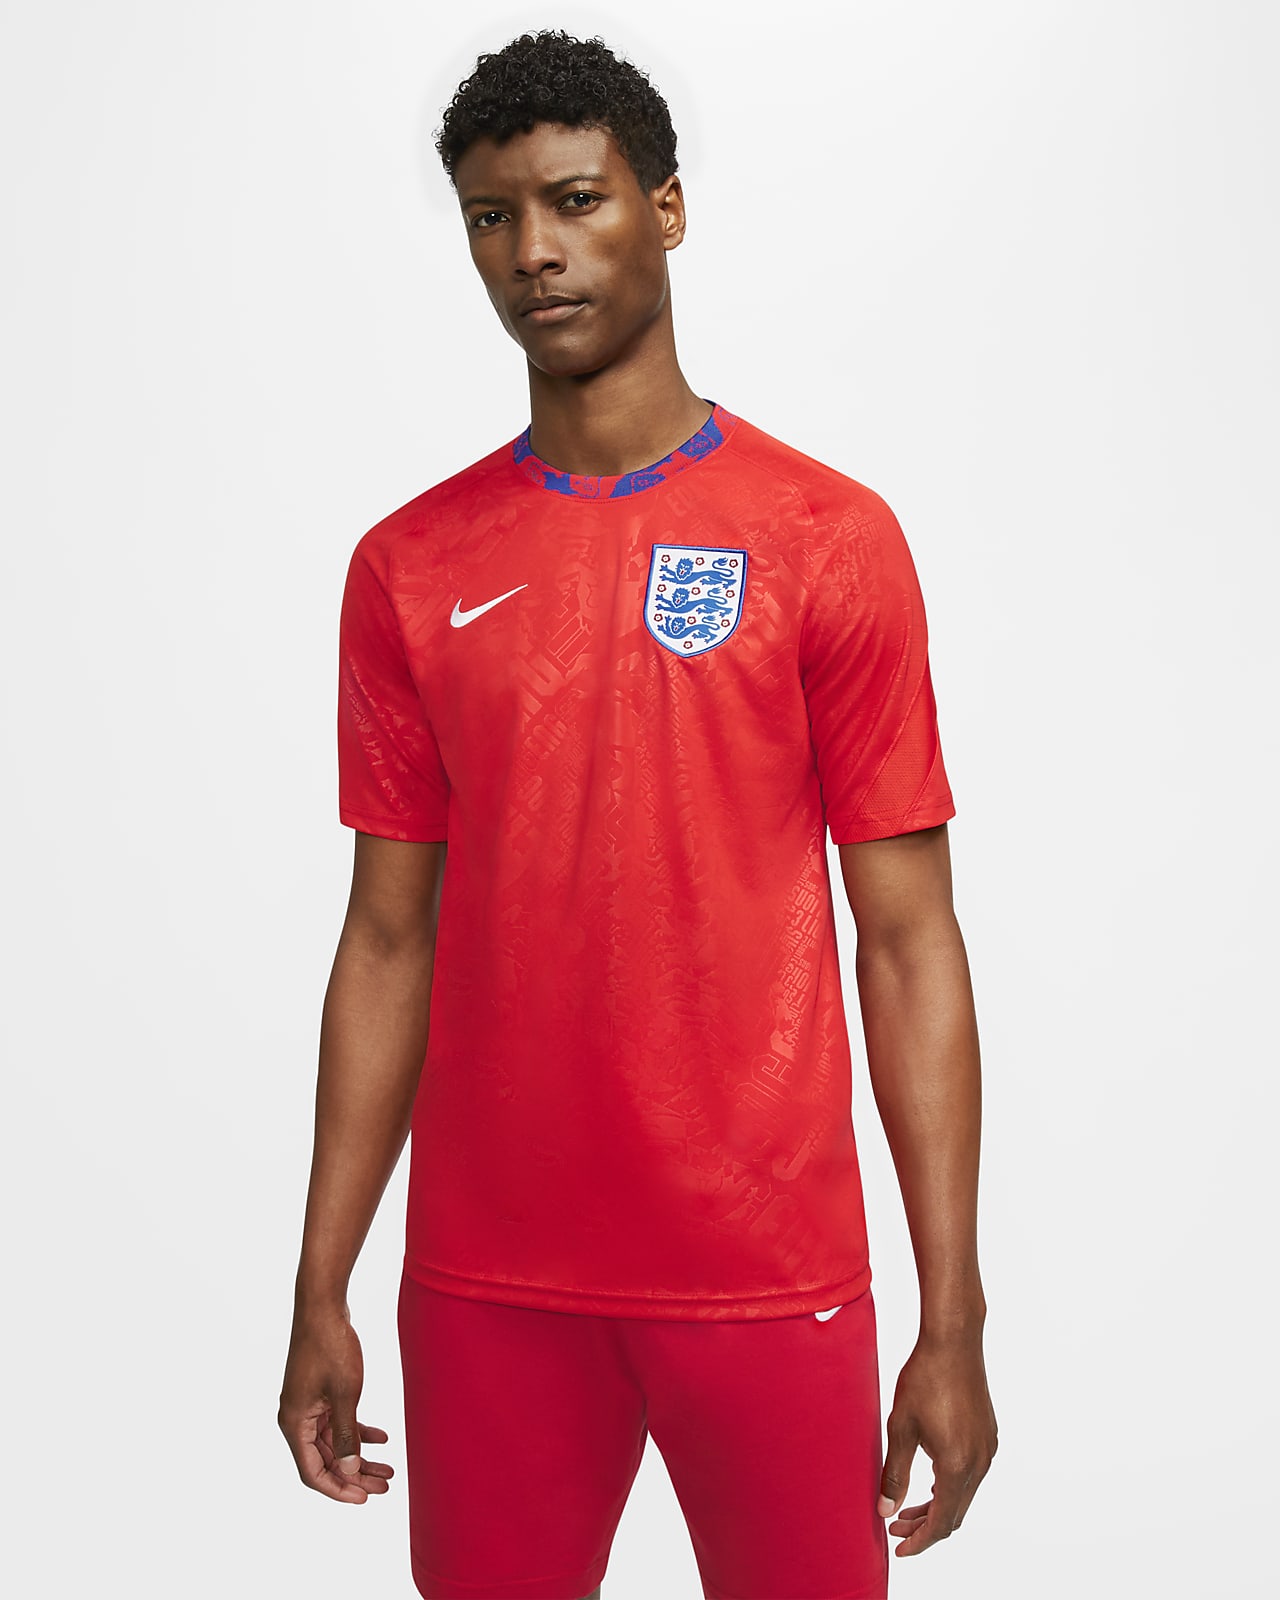 england men's soccer jersey